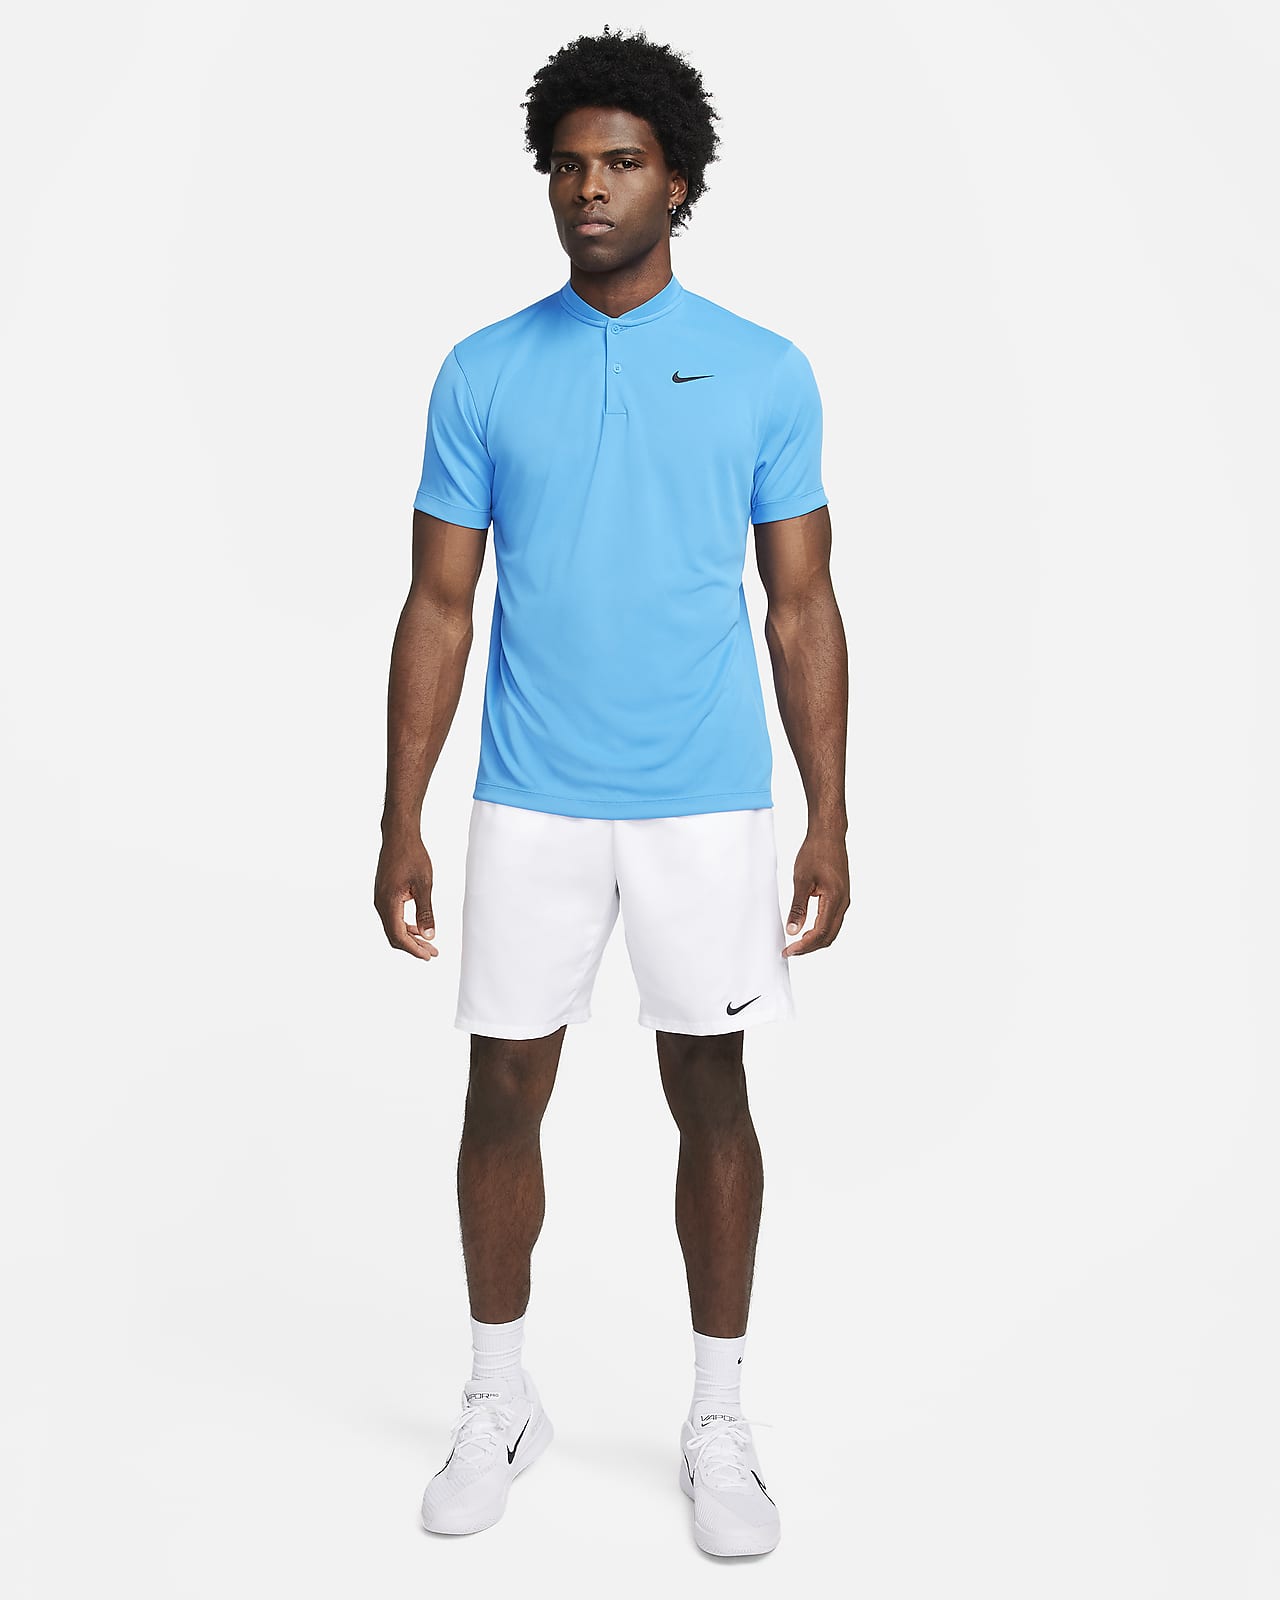 Nike The Athletic Dept. White Short Sleeve Polo Shirt Men's NWT